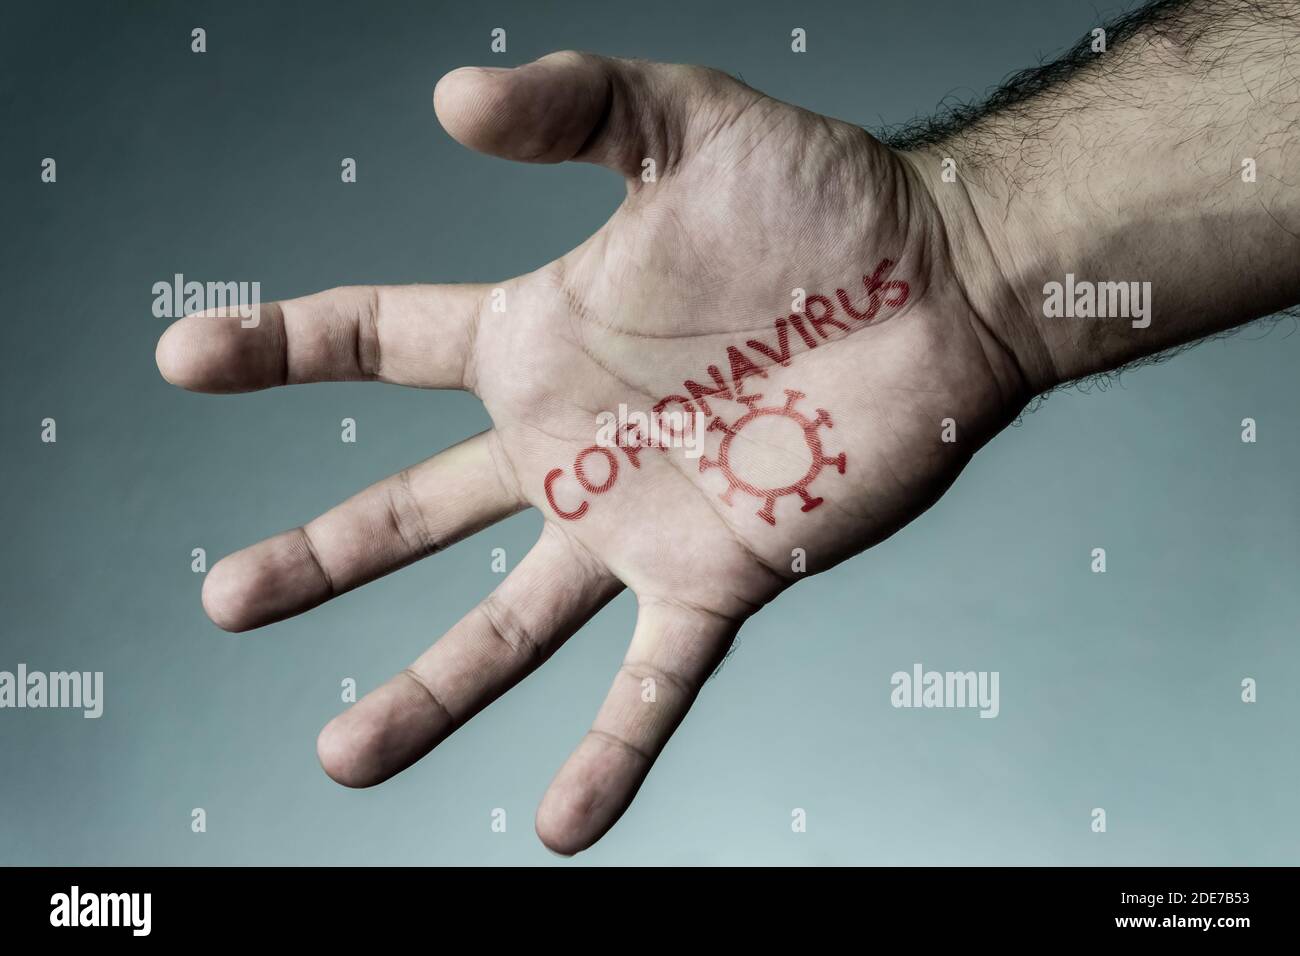 Coronavirus text written on hand of man. Covid-19, Coronavirus, SARS-CoV-2 outbreak. Coronavirus concept and background. Stock Photo